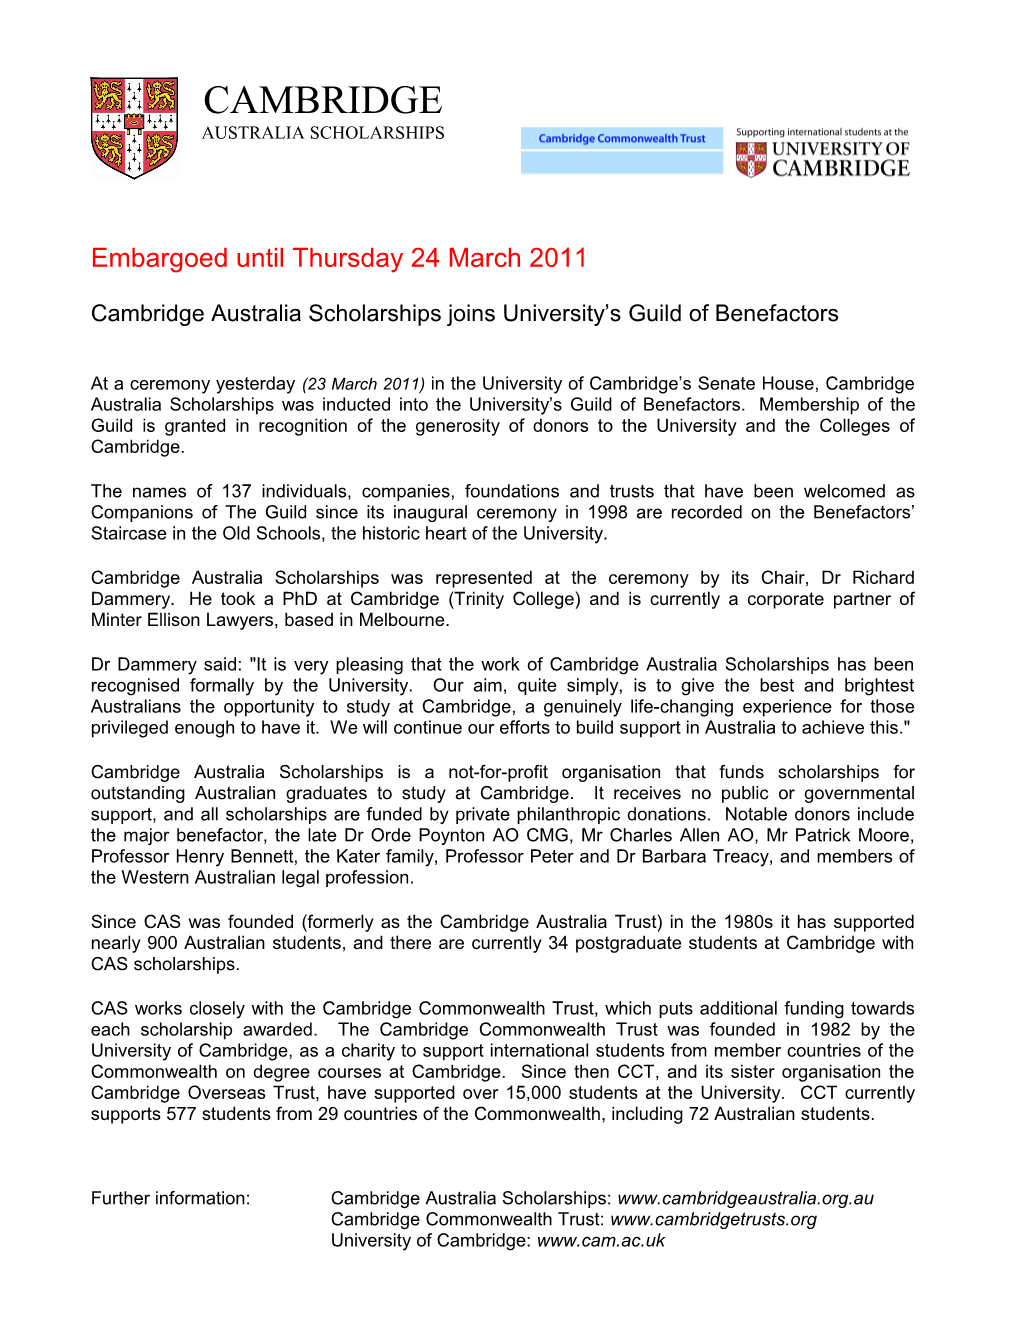 Notes About Cambridge Australia Scholarships : February 2011